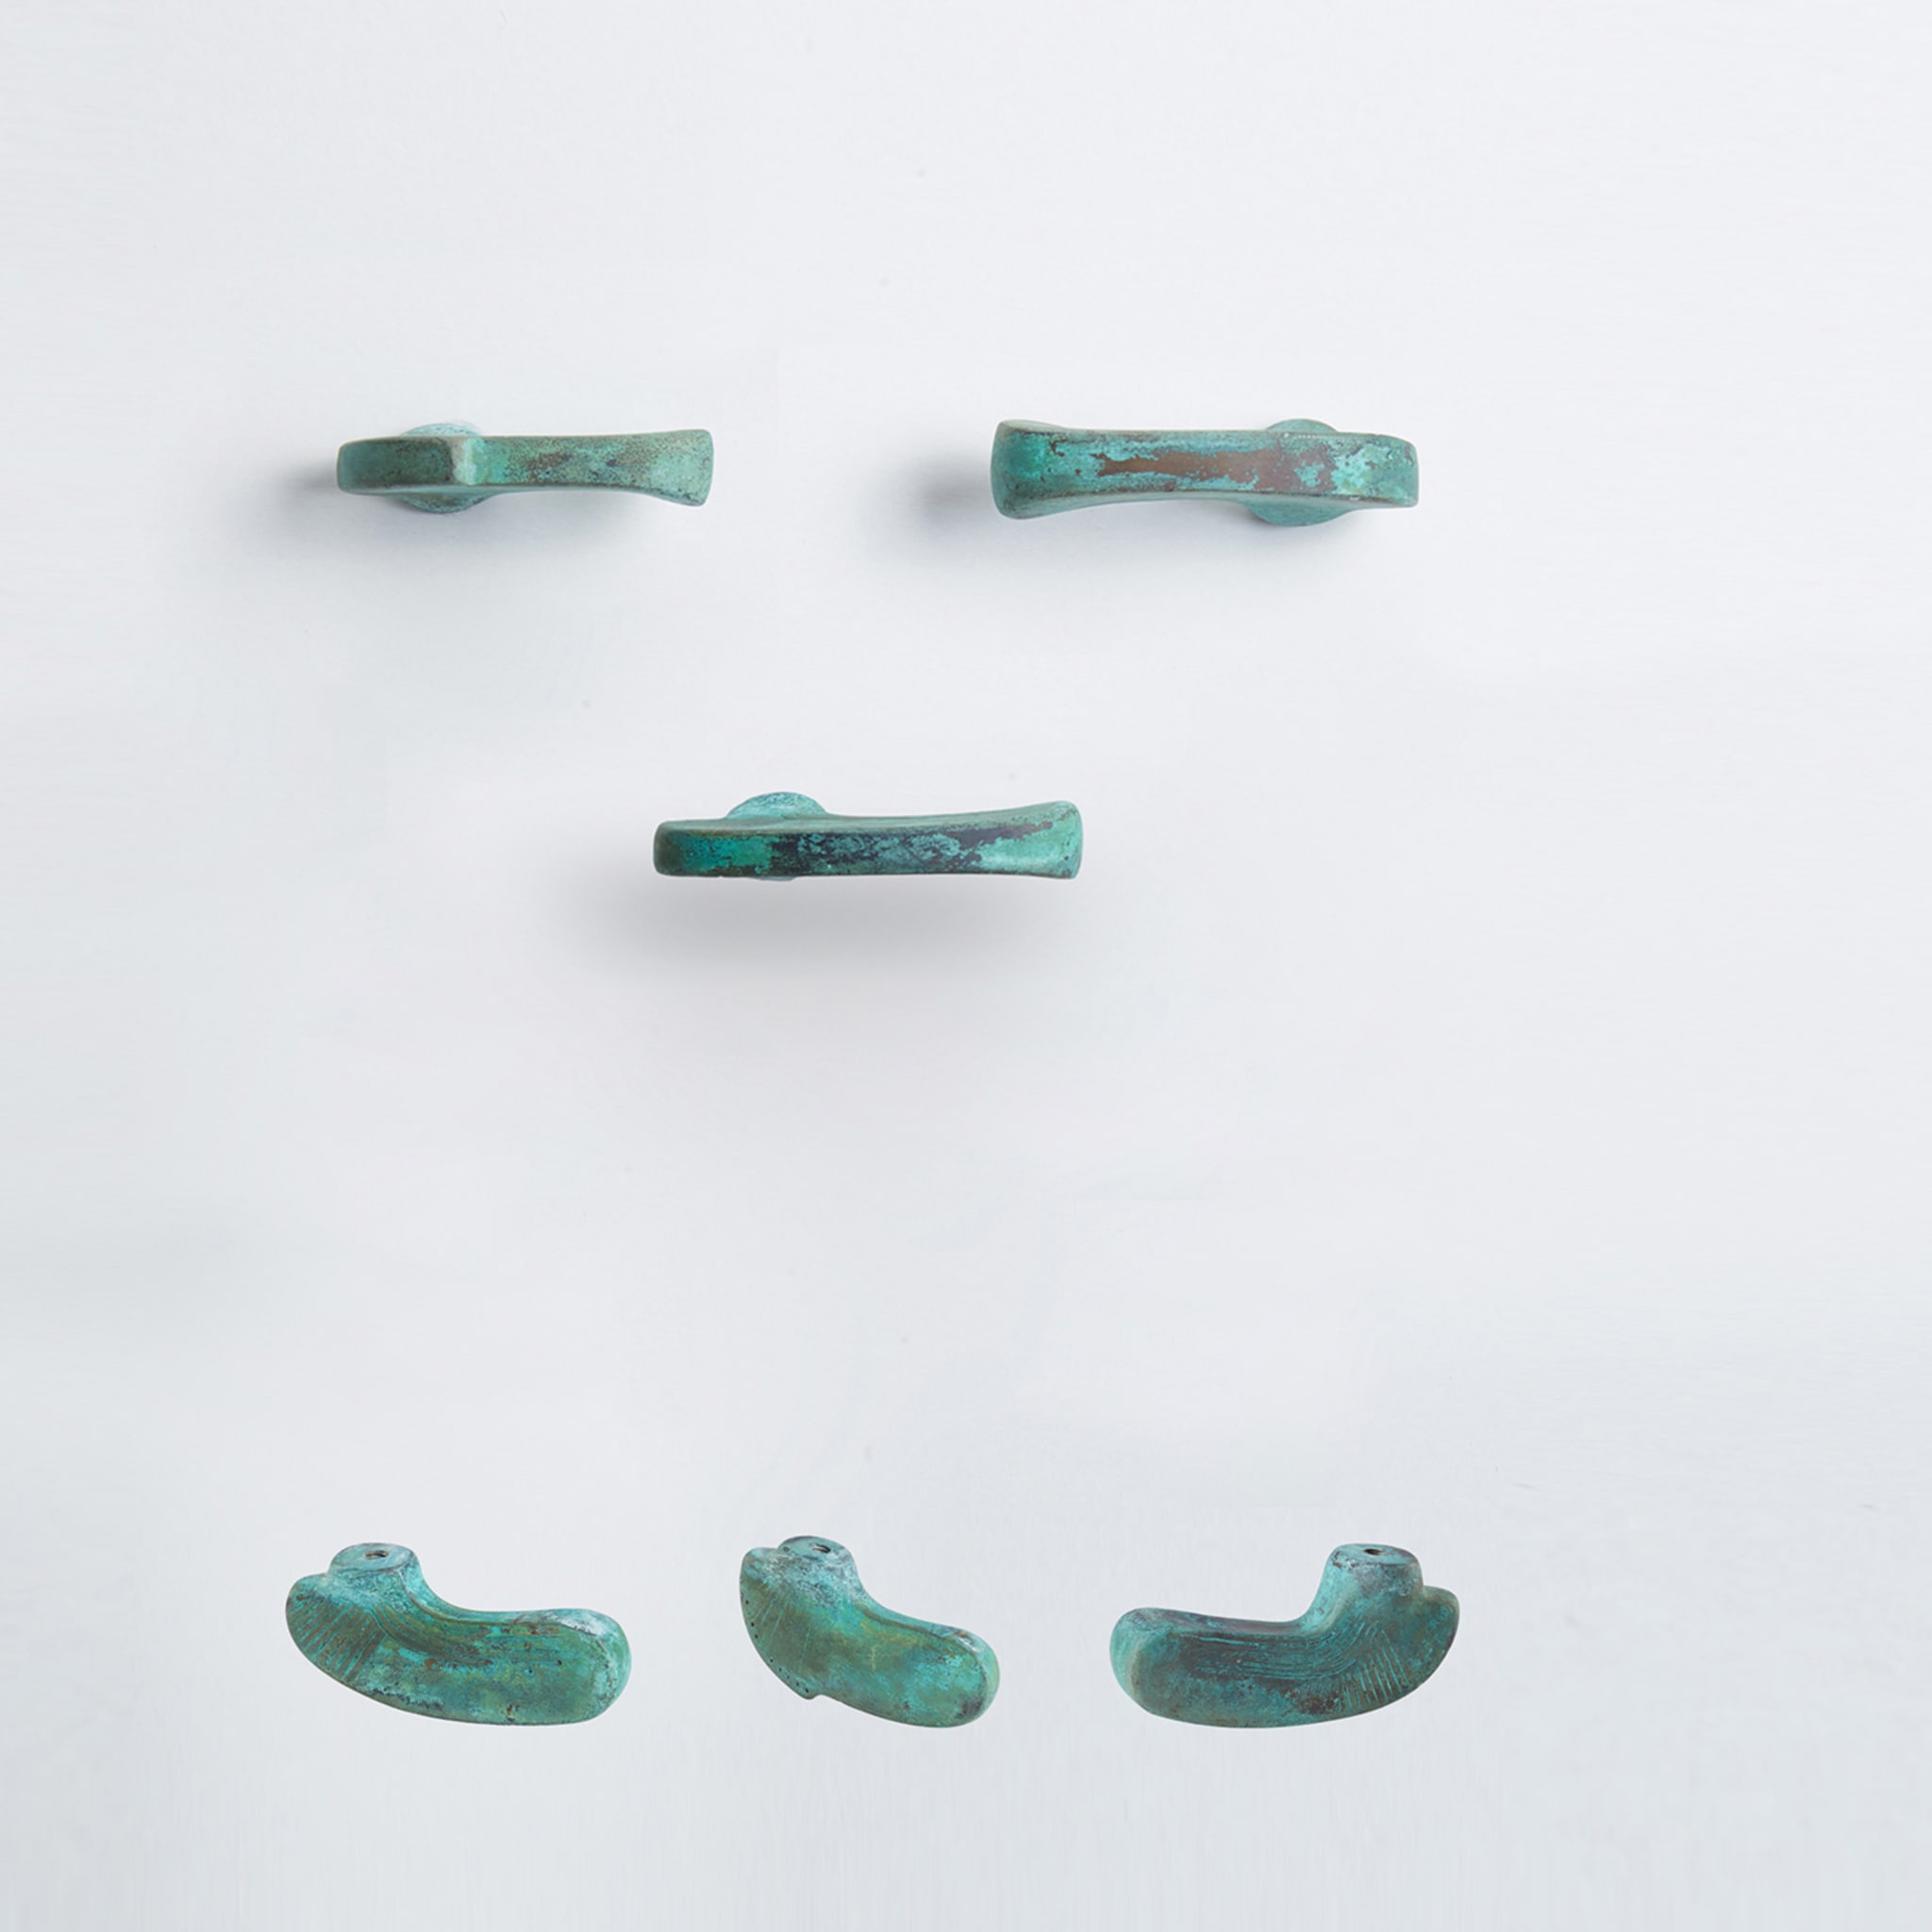 Inca Set of 4 Green Door Knobs #1 by Nicole Valenti - Alternative view 1